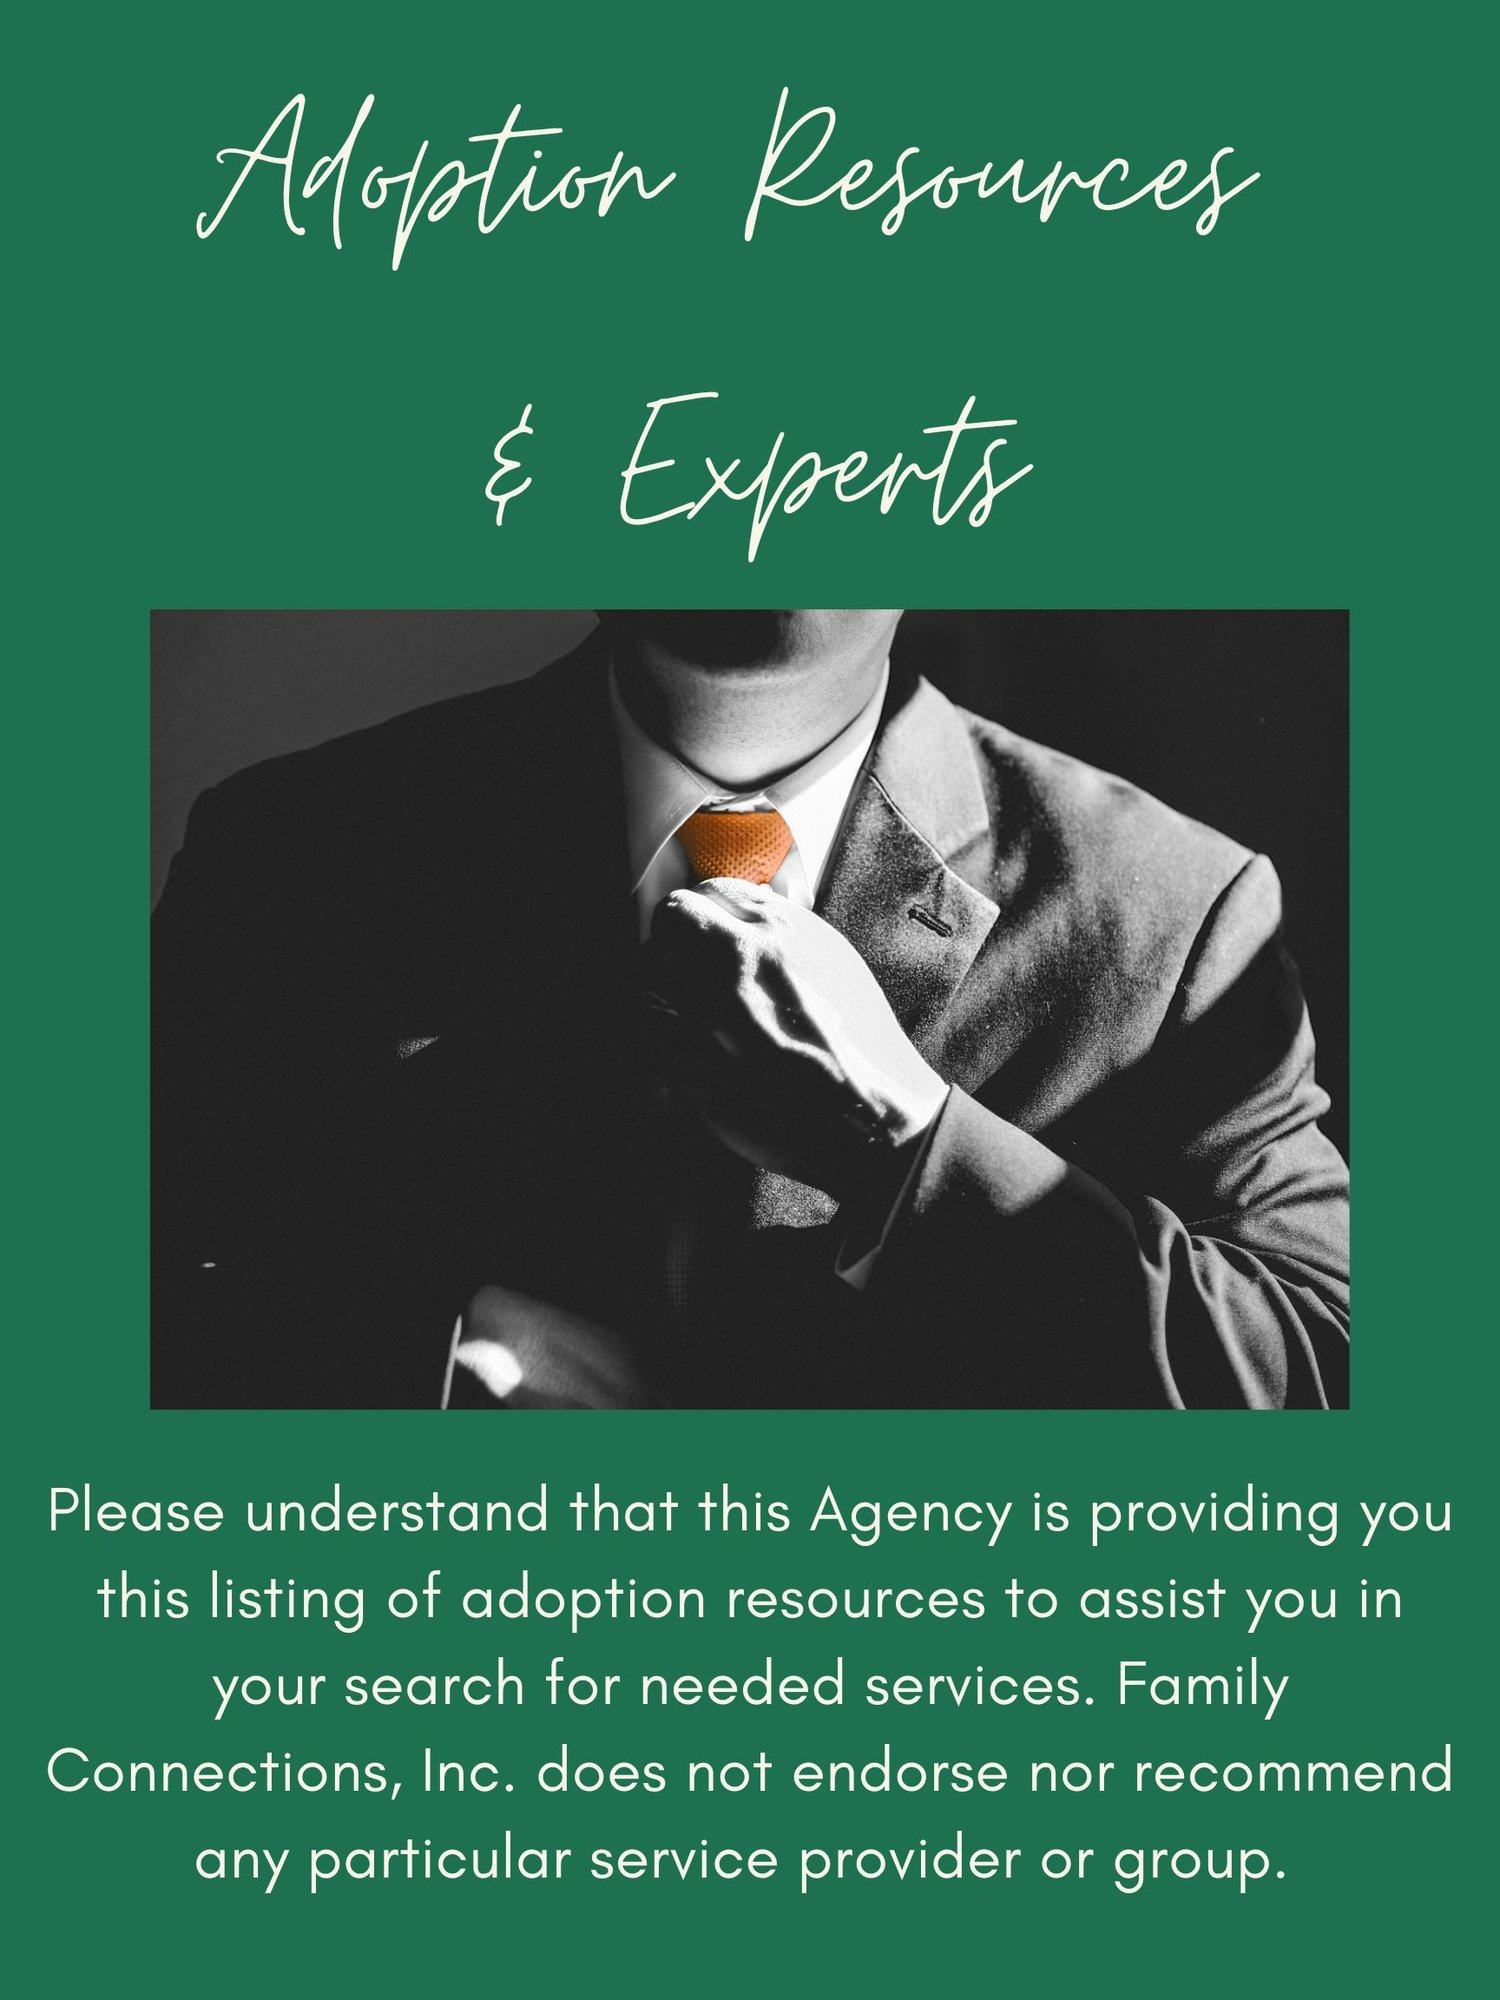 Adoption Resources & Experts